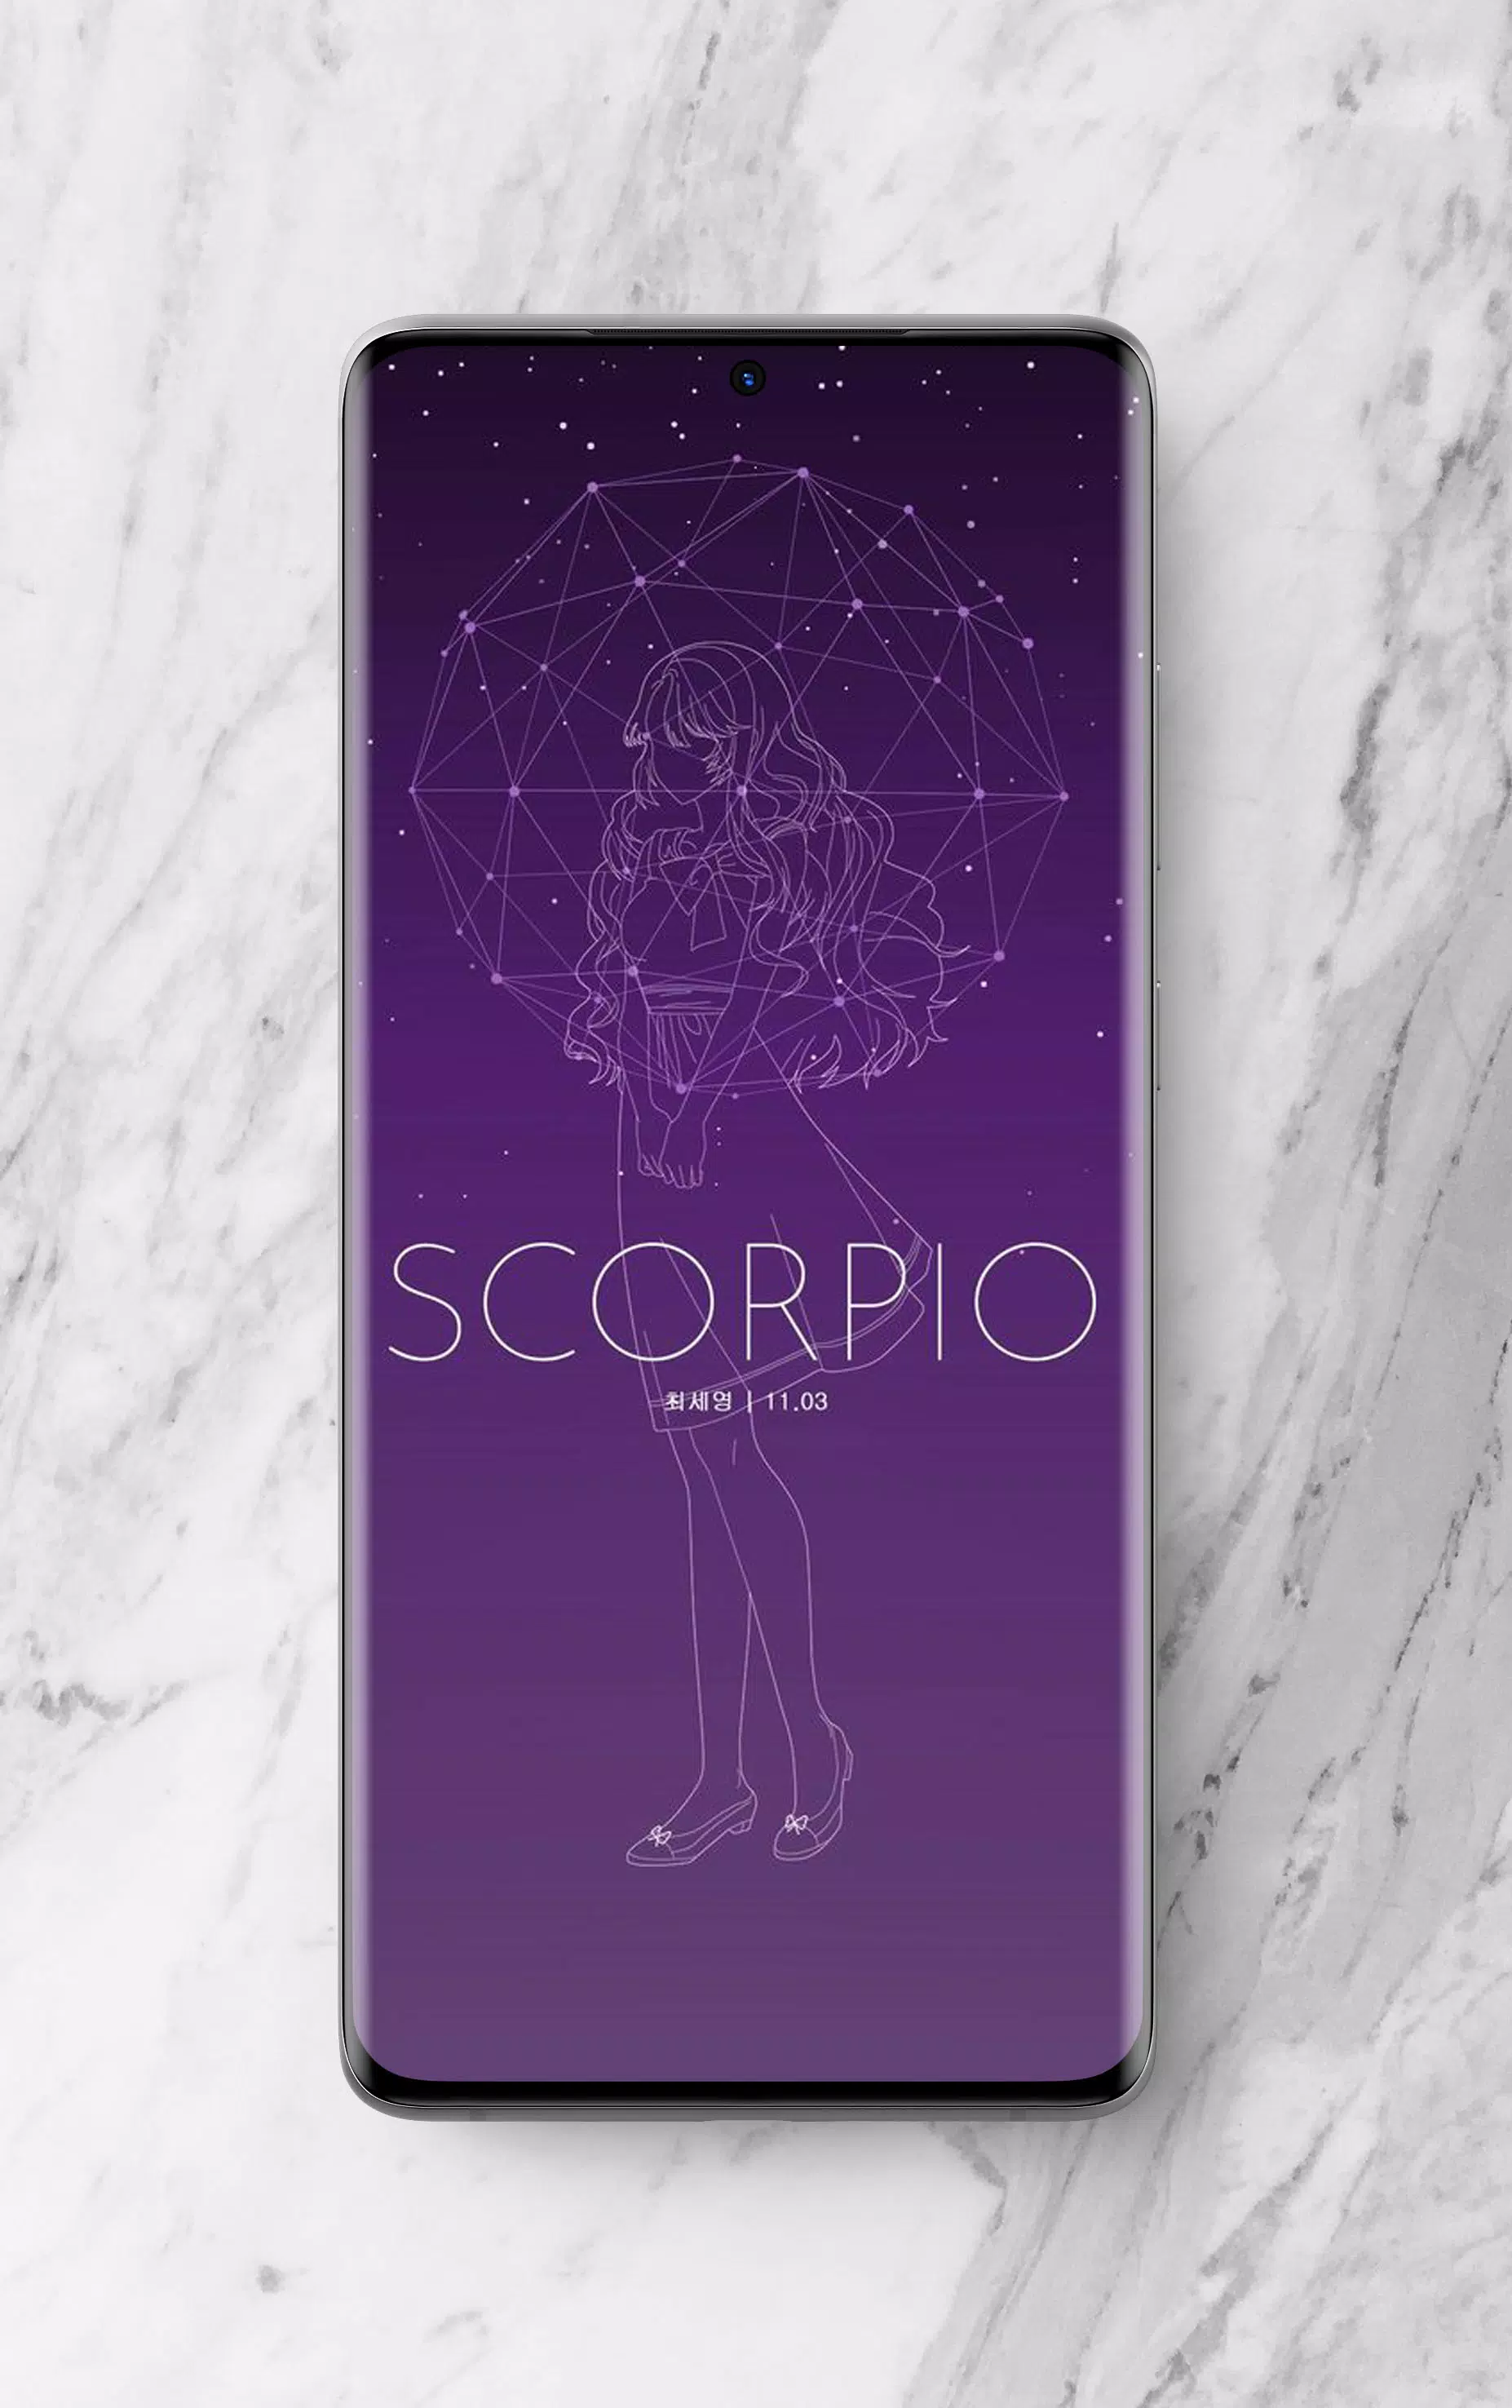 Download Scorpio Zodiac Sign Hd Wallpaper | Wallpapers.com